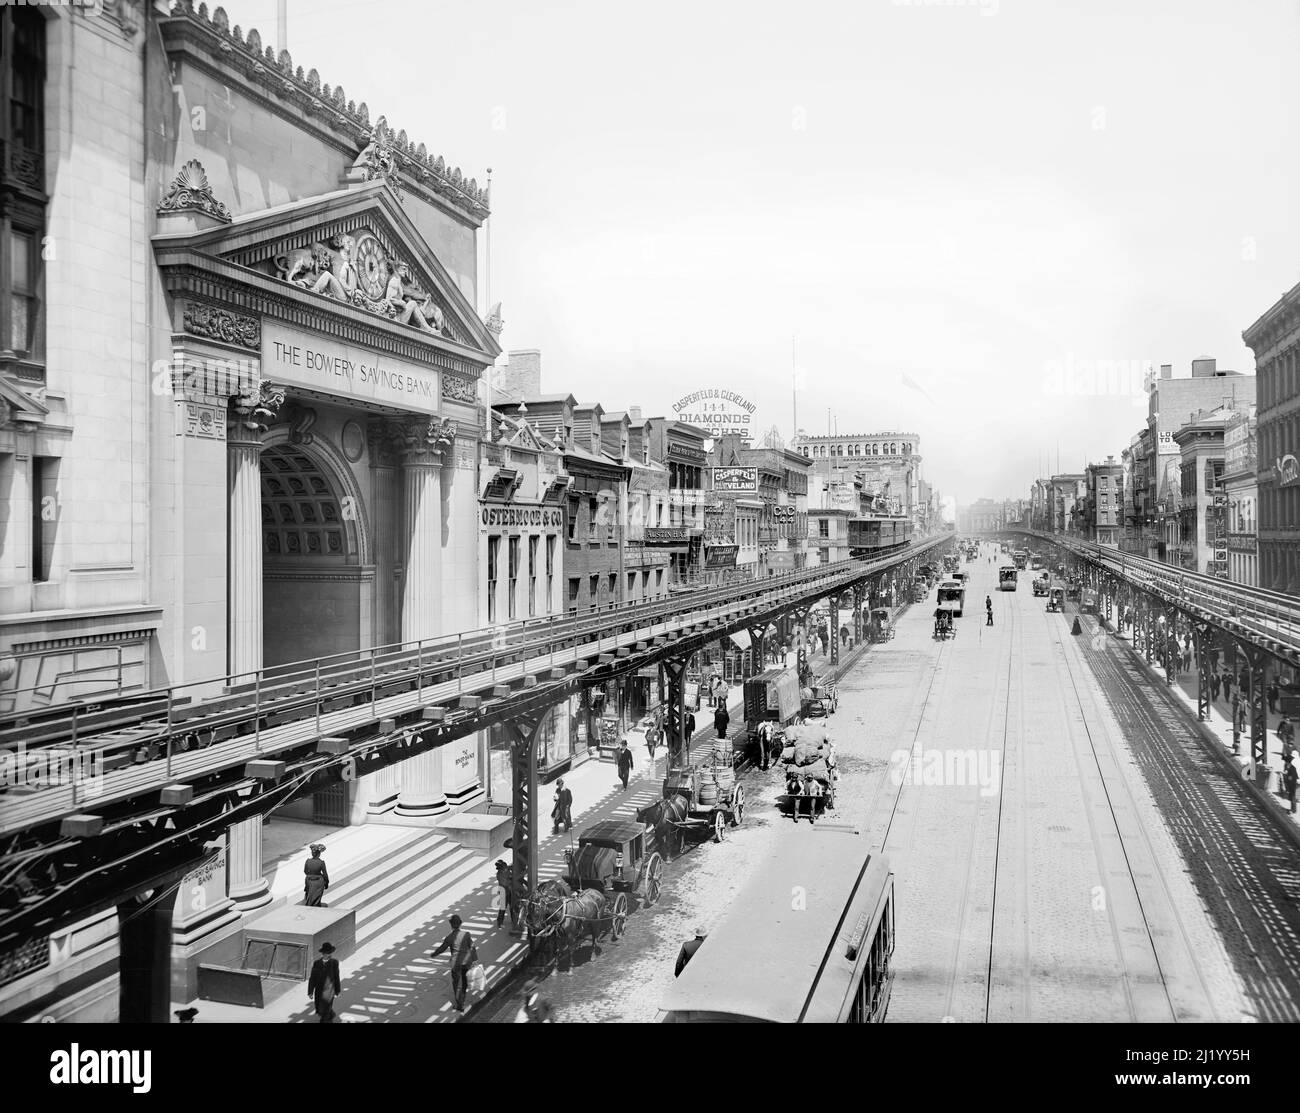 Straßenszene und erhöhte Bahnstrecken, Bowery, New York City, New York, USA, Detroit Publishing Company, 1905 Stockfoto